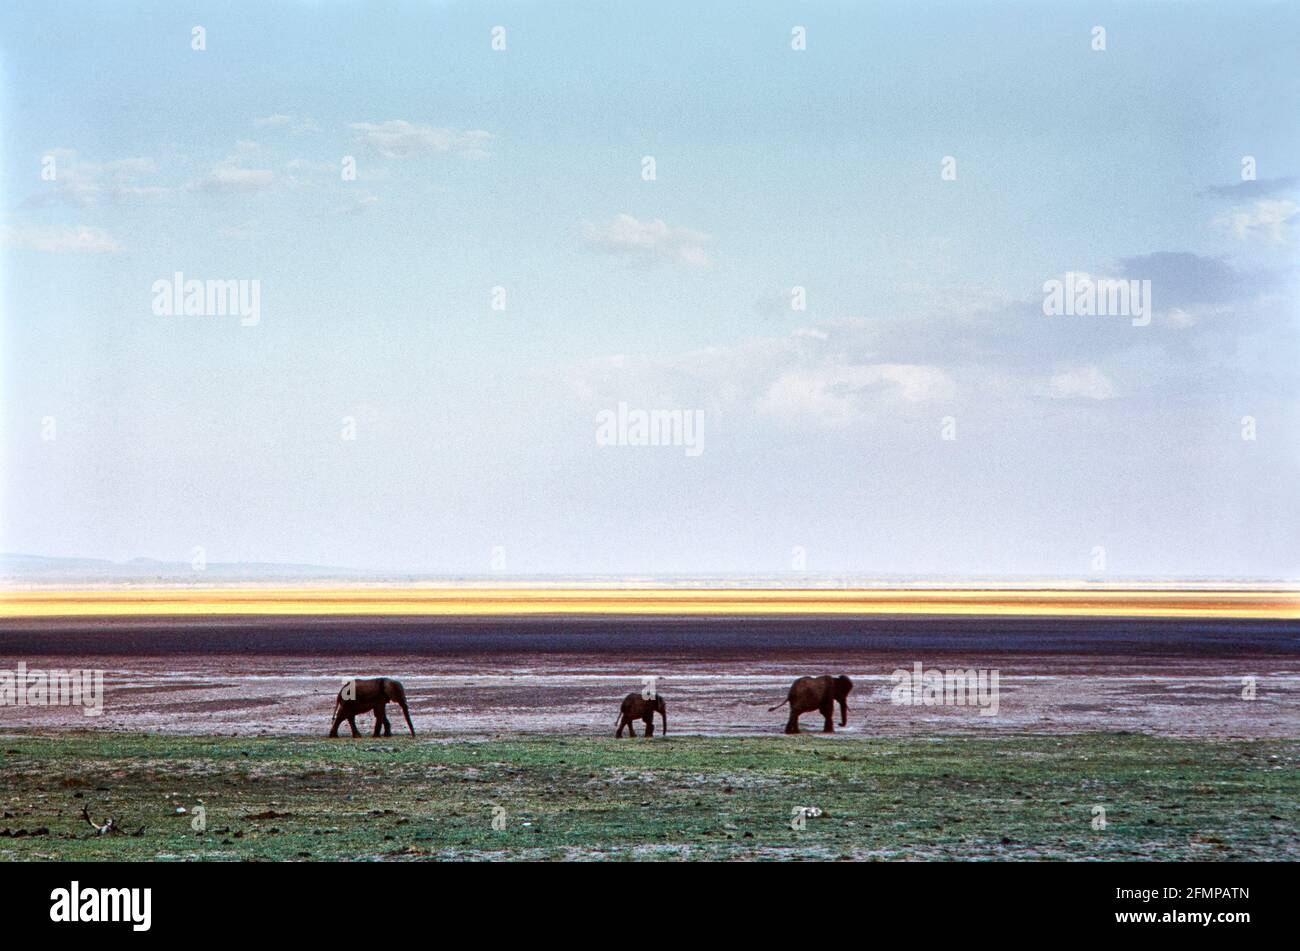 Three elephants on the move in the endless expanse of Lake Manyara National Park. 07.02.2006 - Christoph Keller Stock Photo